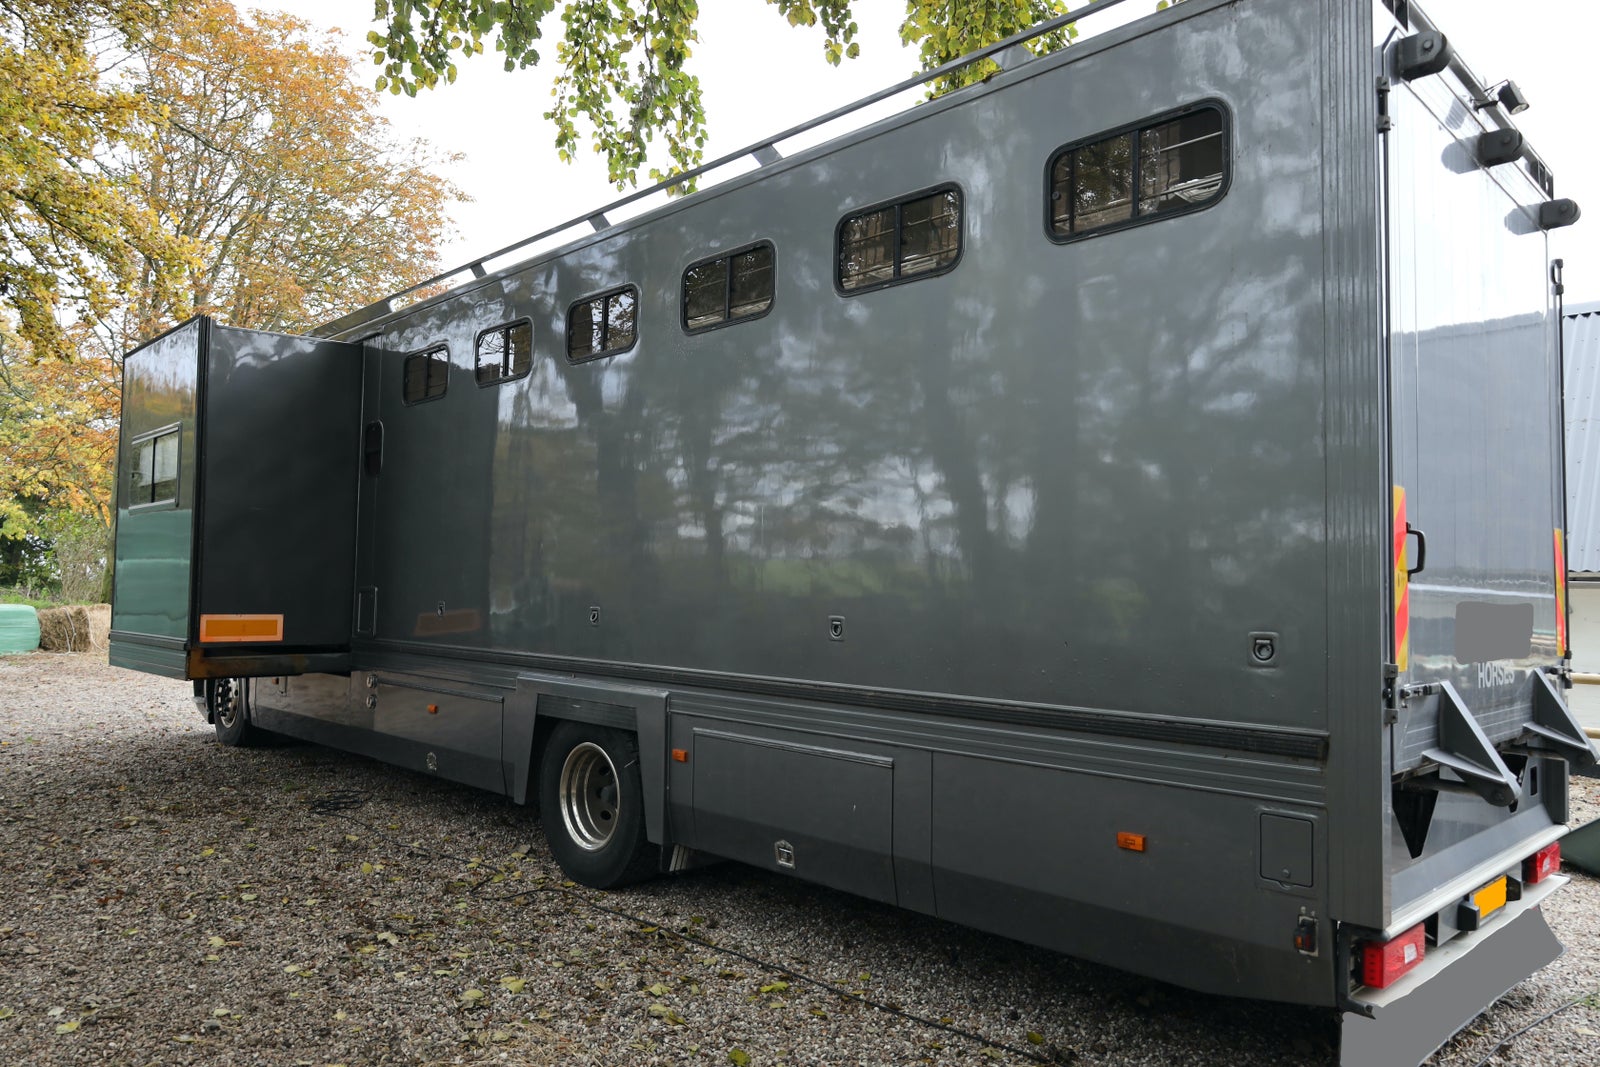 Scania hestelastbil med plads til 7 heste - liv...